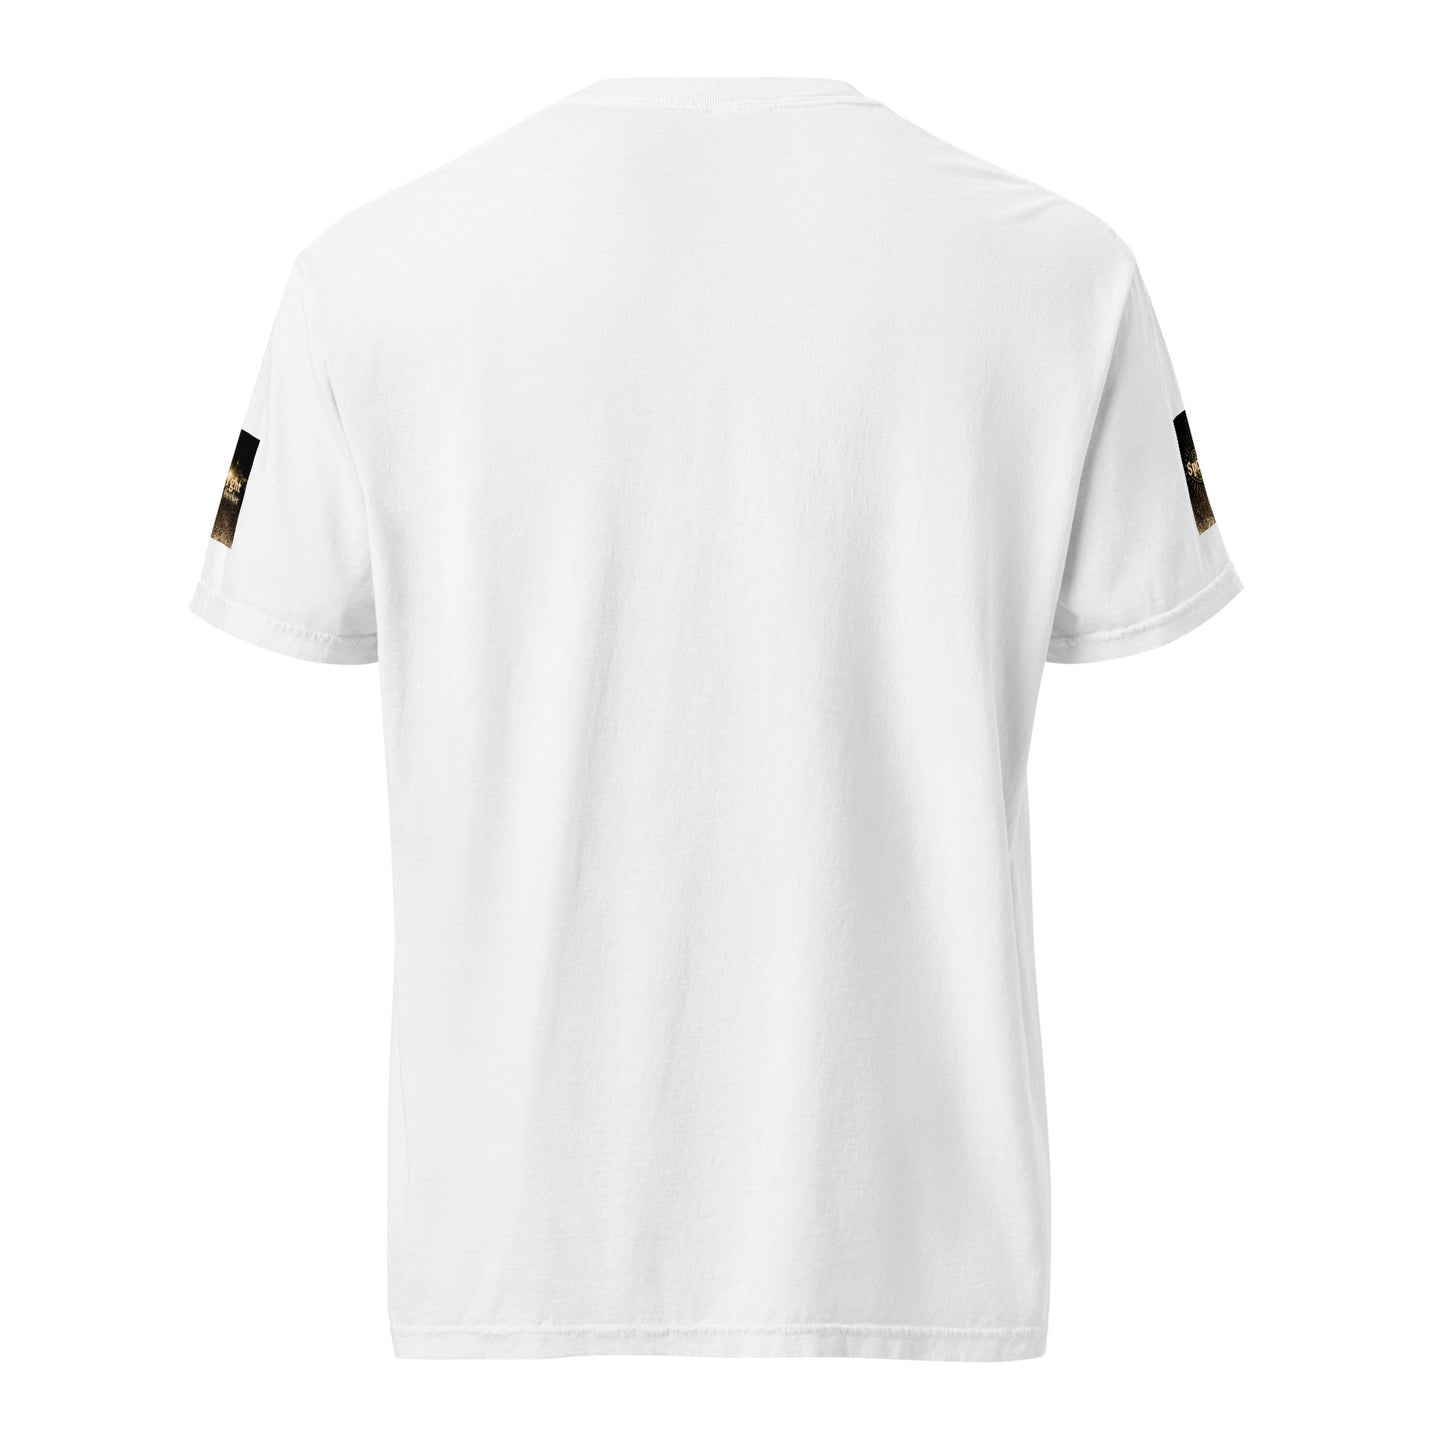 Tell 'Em/Fan Heavyweight Unisex T-Shirt w/Signature SpotlYght Tags - Black